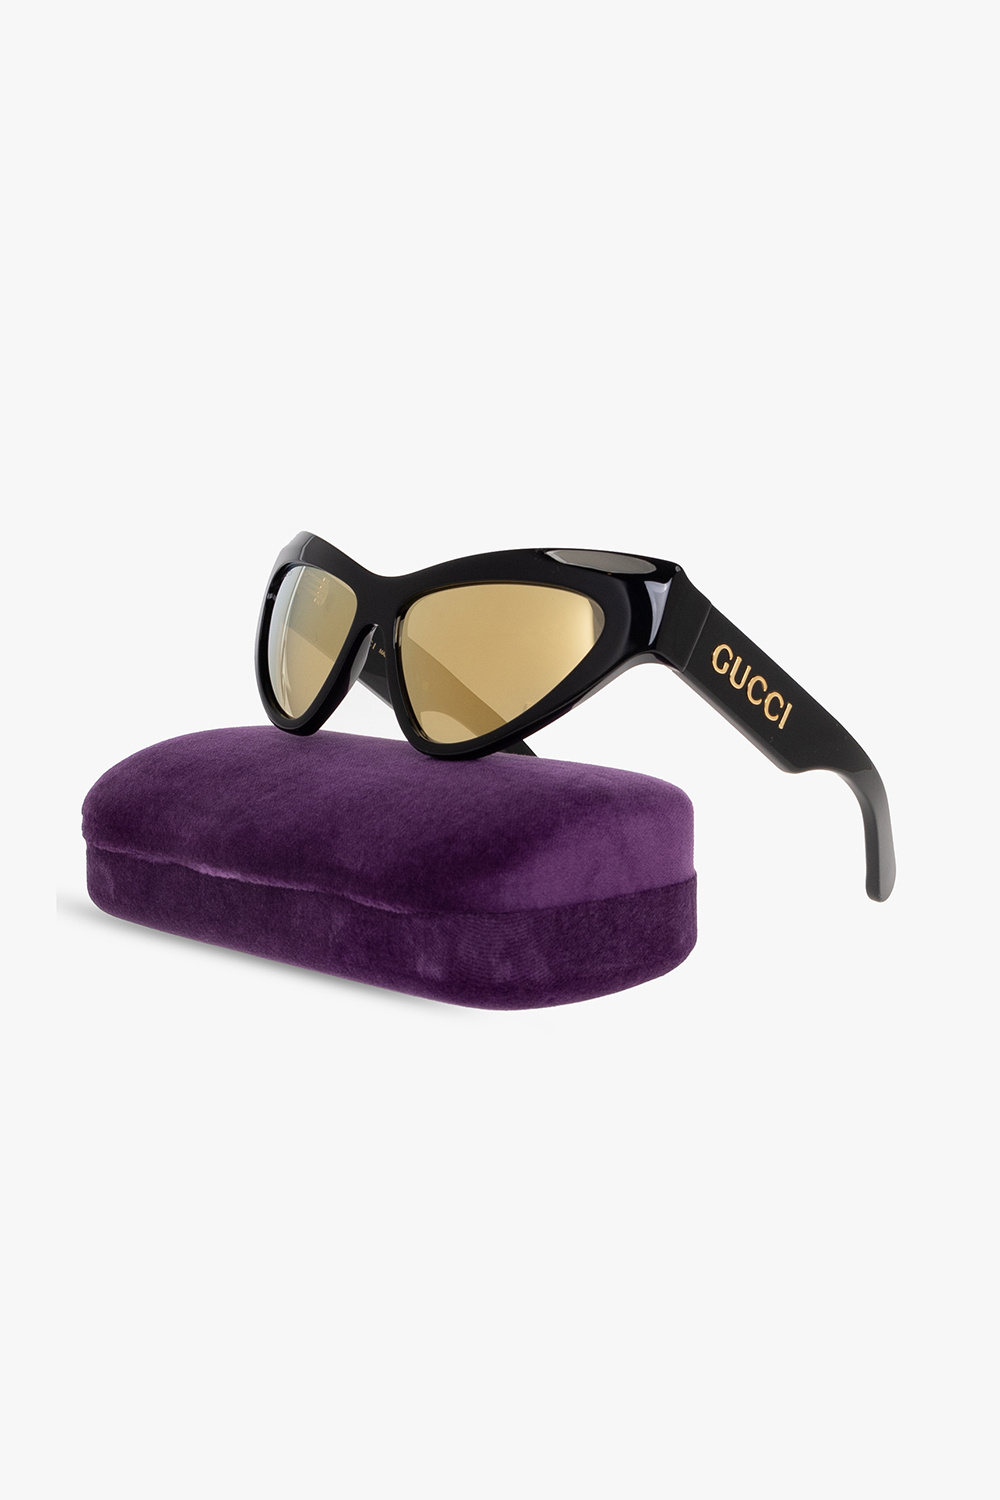 Gucci Oxblood sunglasses